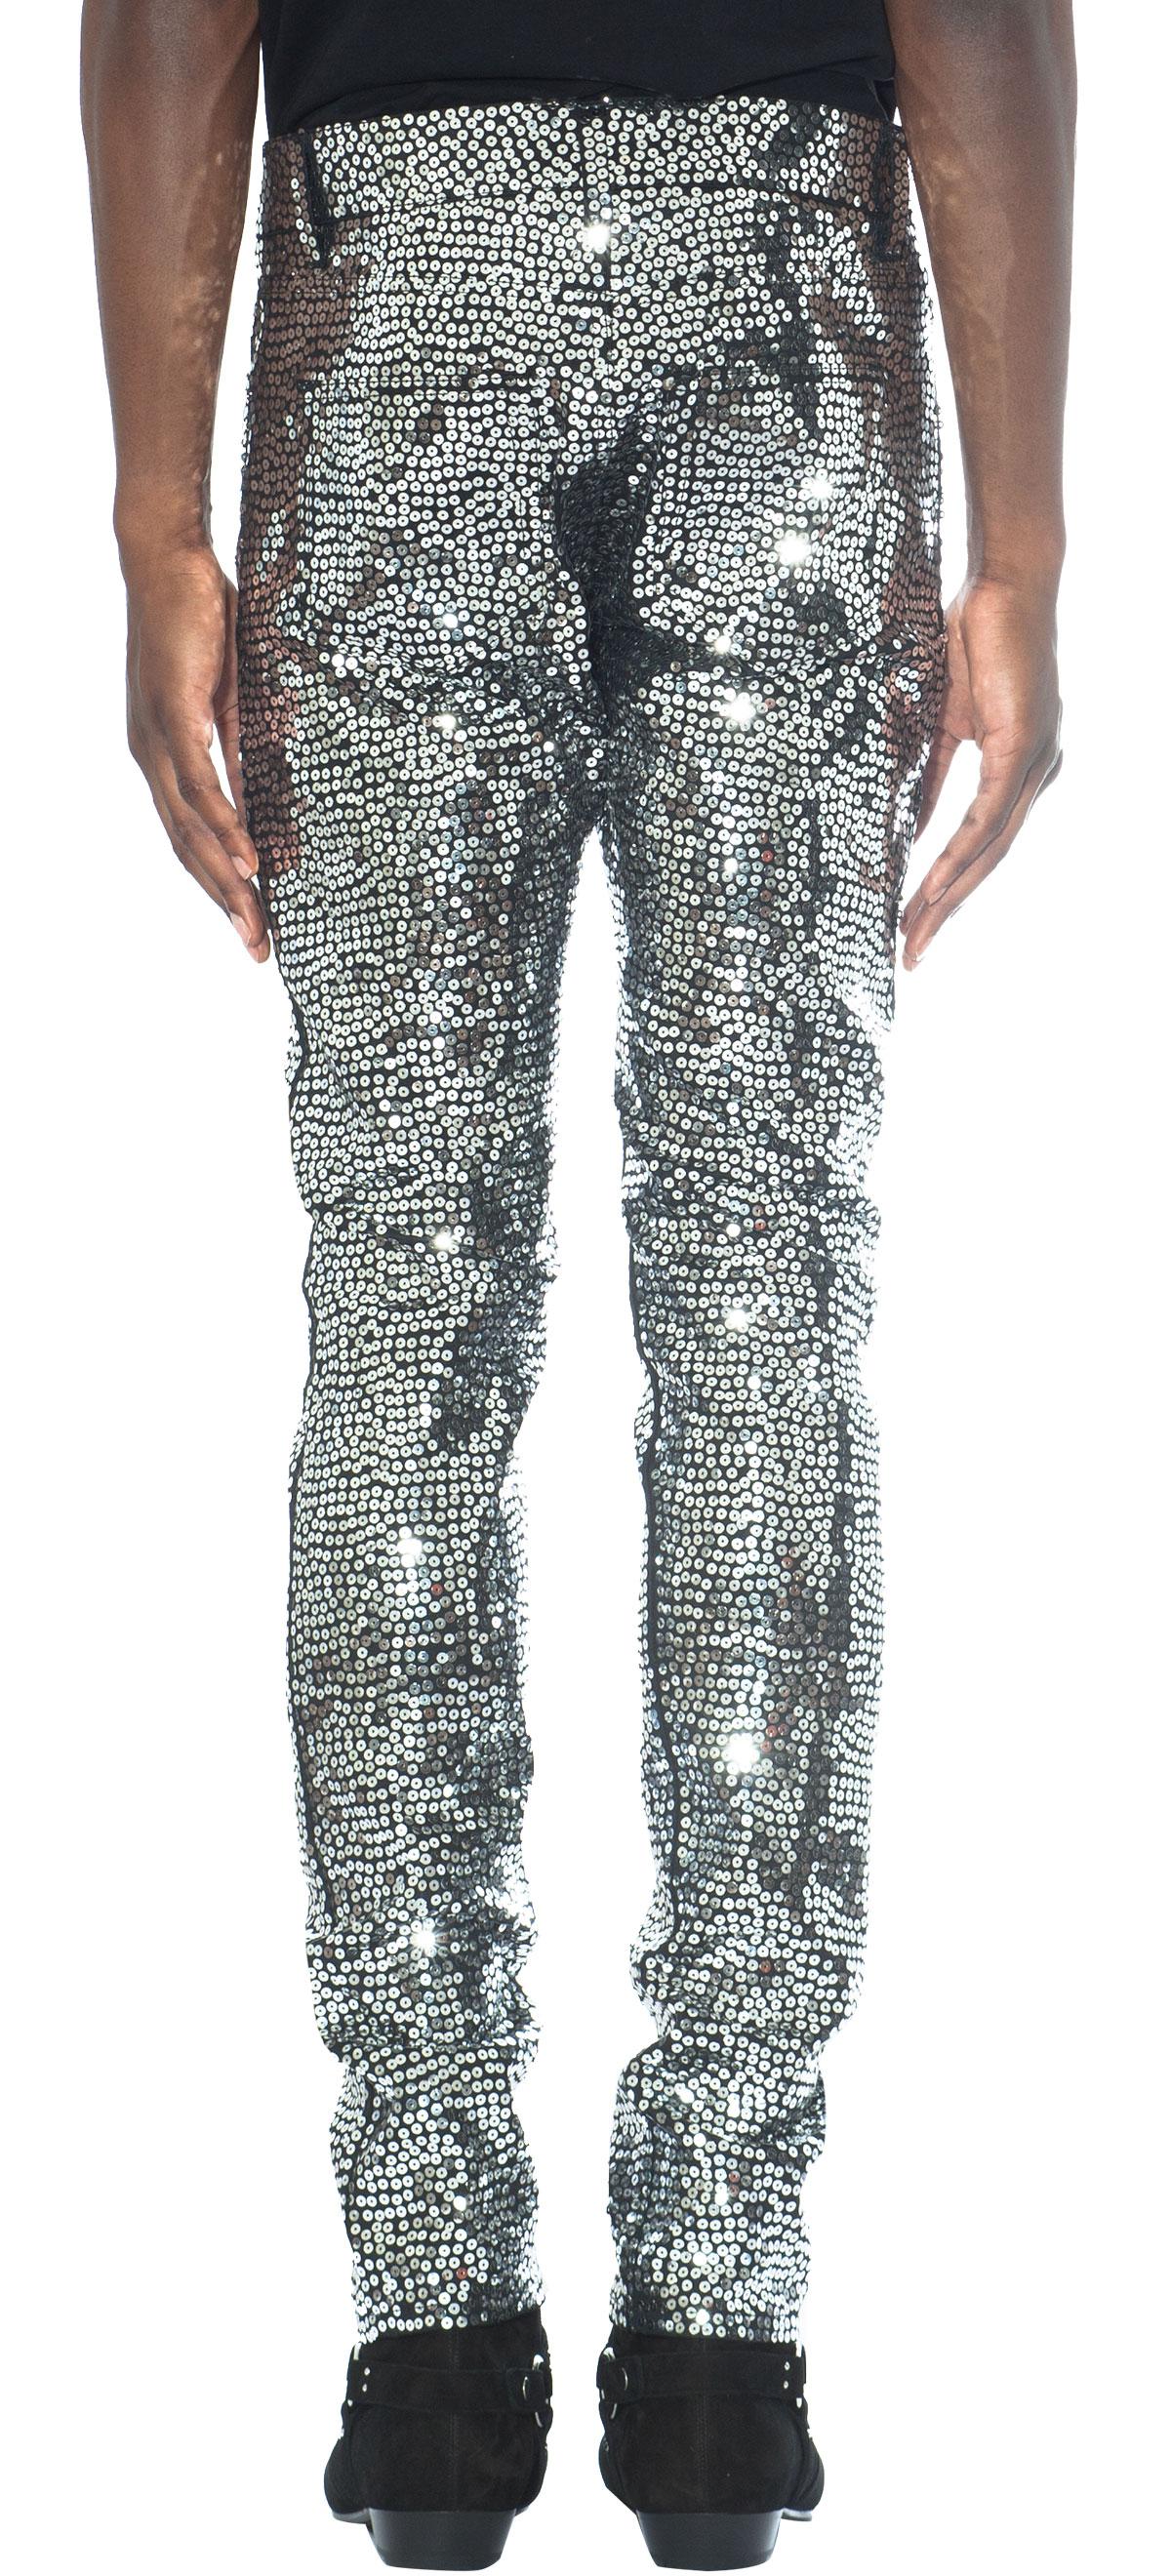 Lyst - Saint Laurent Sequin-embellished Jeans in Metallic for Men